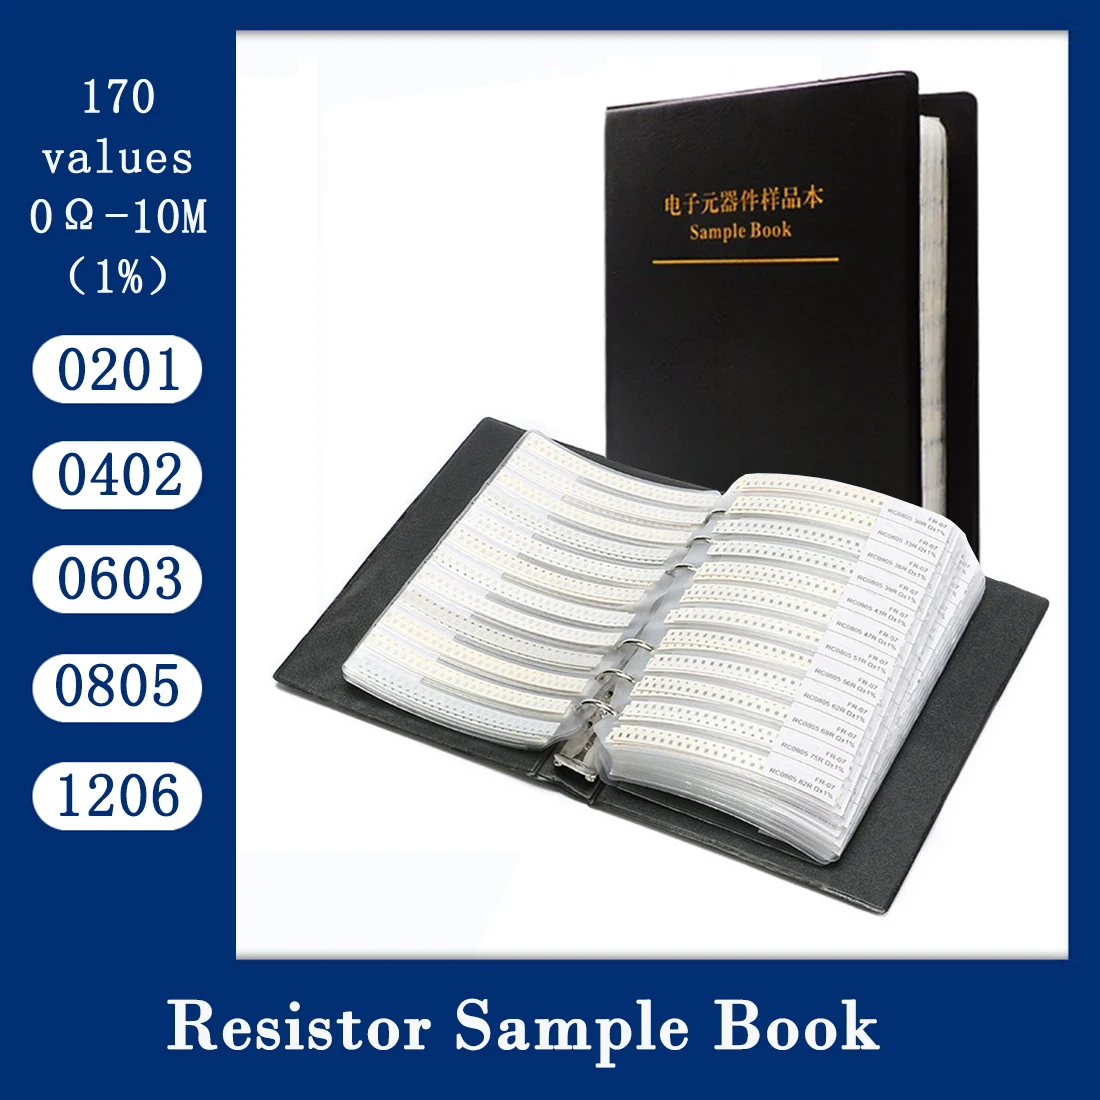 Resistor Book Kit Smd Book chip Resistor Sample Book 0201 0402 0603 0805 1206 170 values 50or25pcs 0R~10M 1% resistor assortment